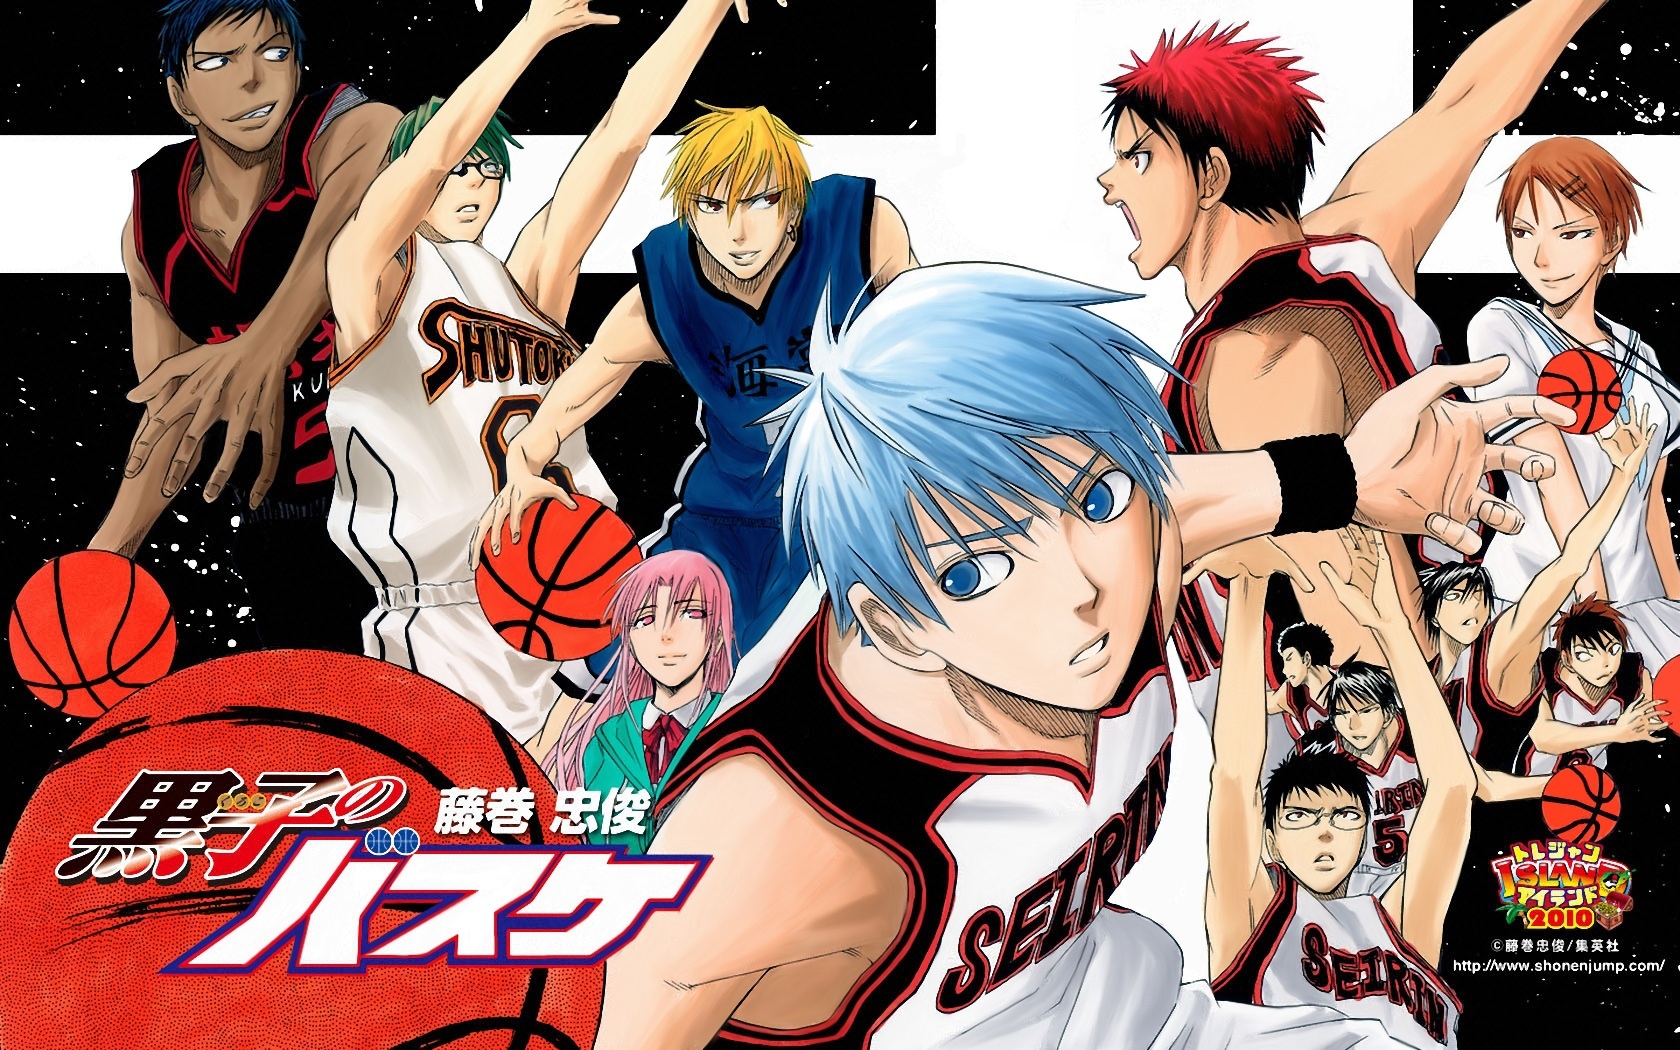 kuroko's basketball wallpaper,anime,cartoon,animation,fictional character,team